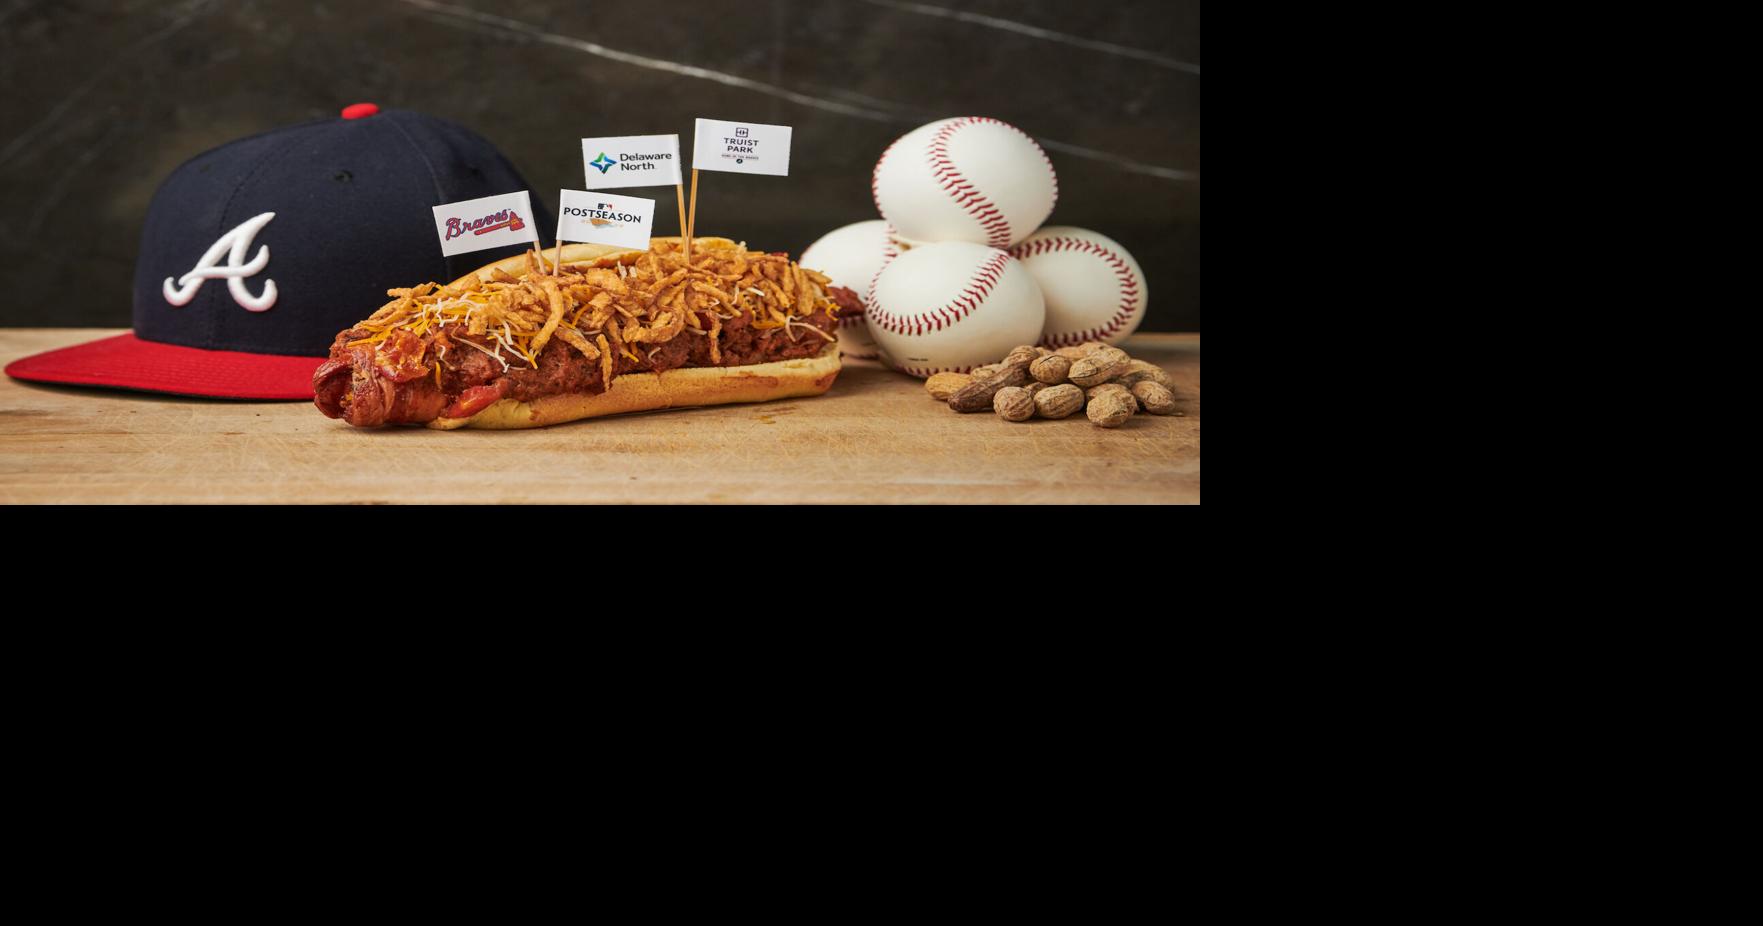 PHOTOS: Atlanta Braves unveil new food offerings for postseason, Slideshows